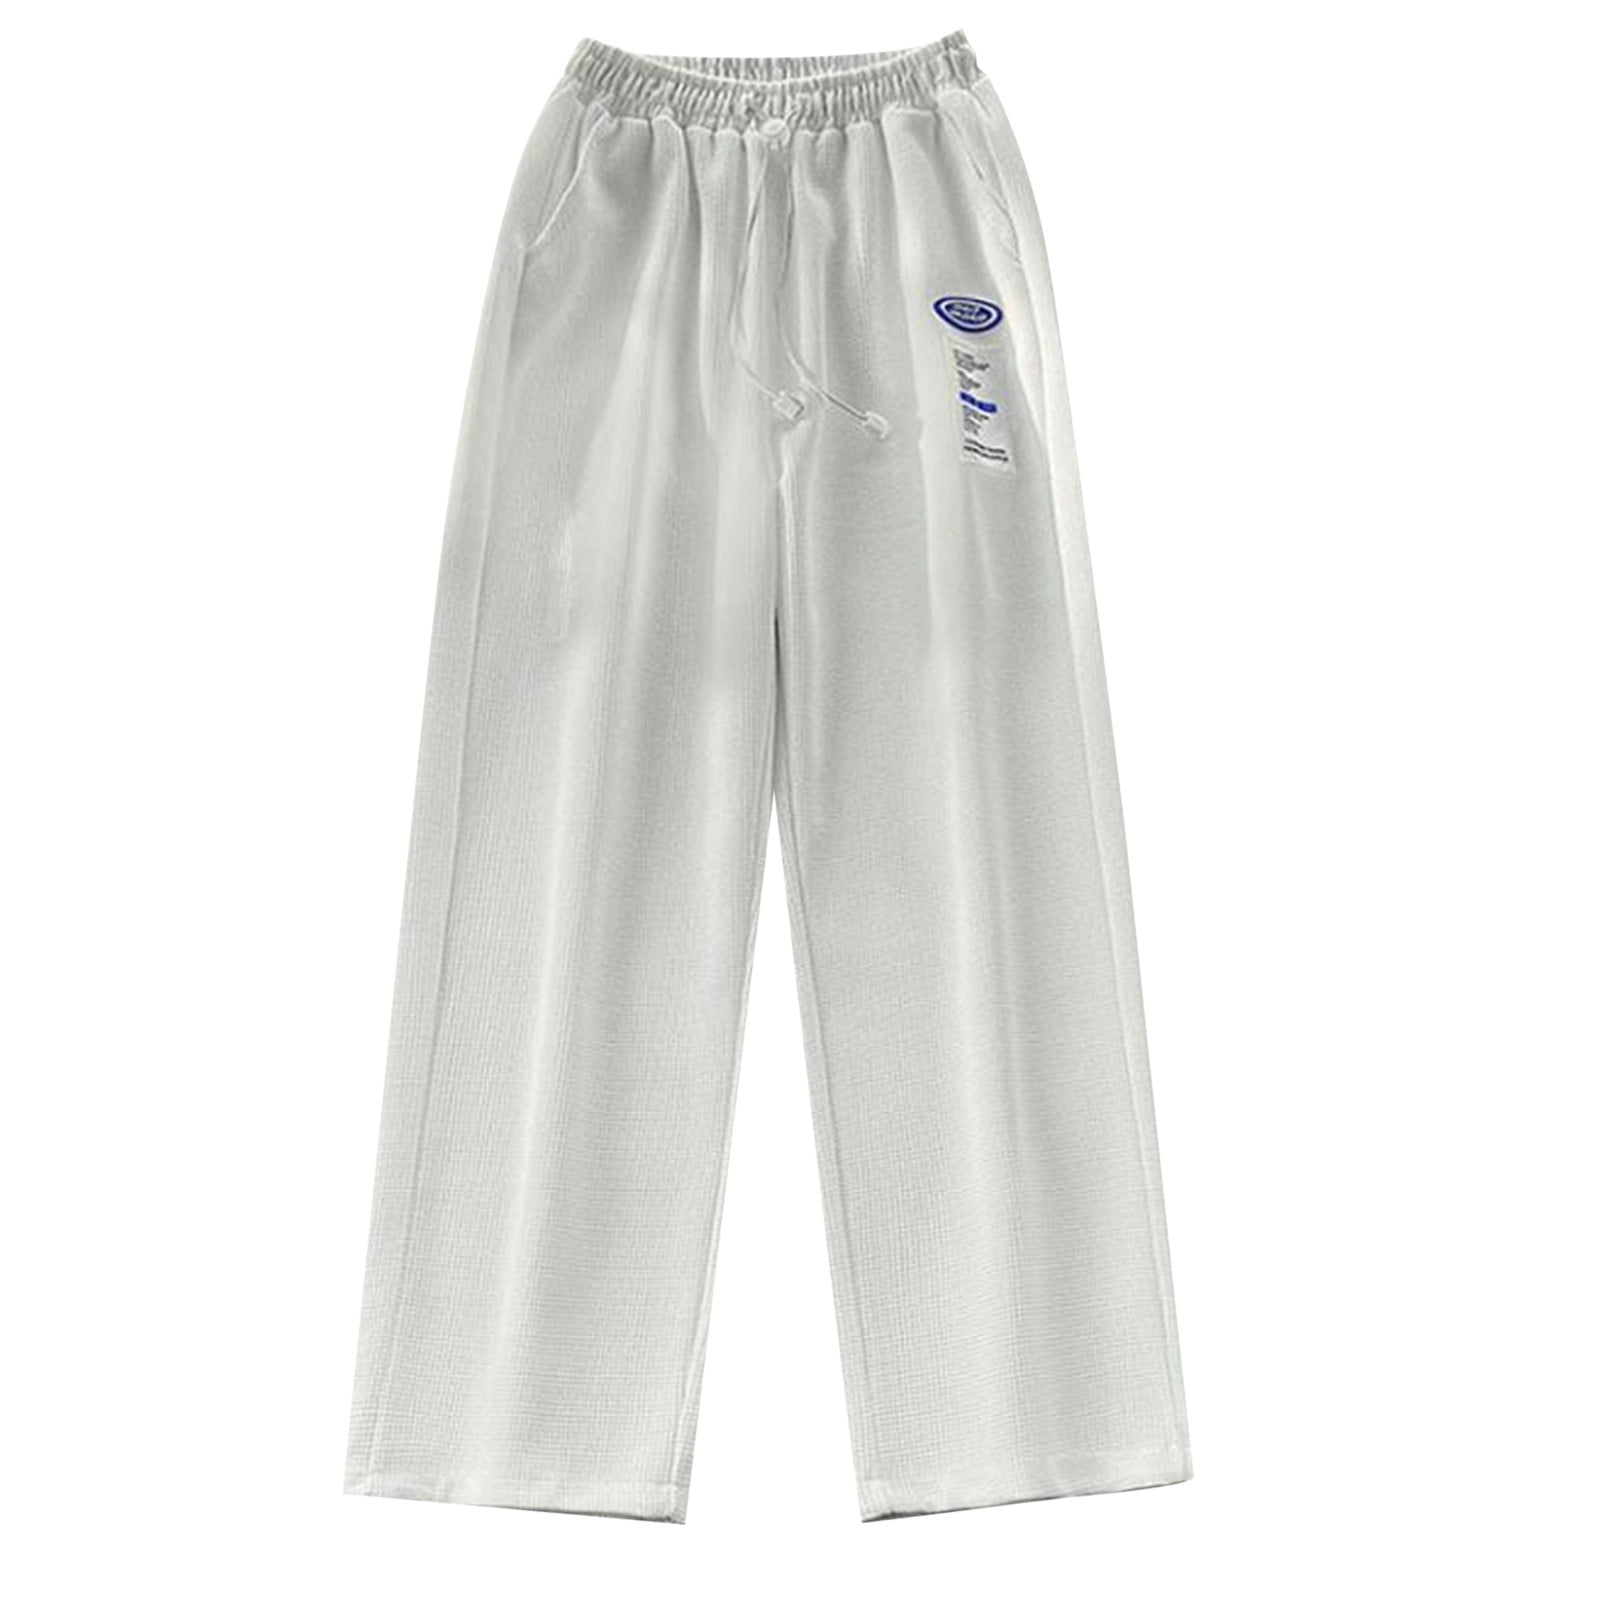 kamemi Business Casual Pants for Men Men's Relaxed Fit Comfort Pants ...